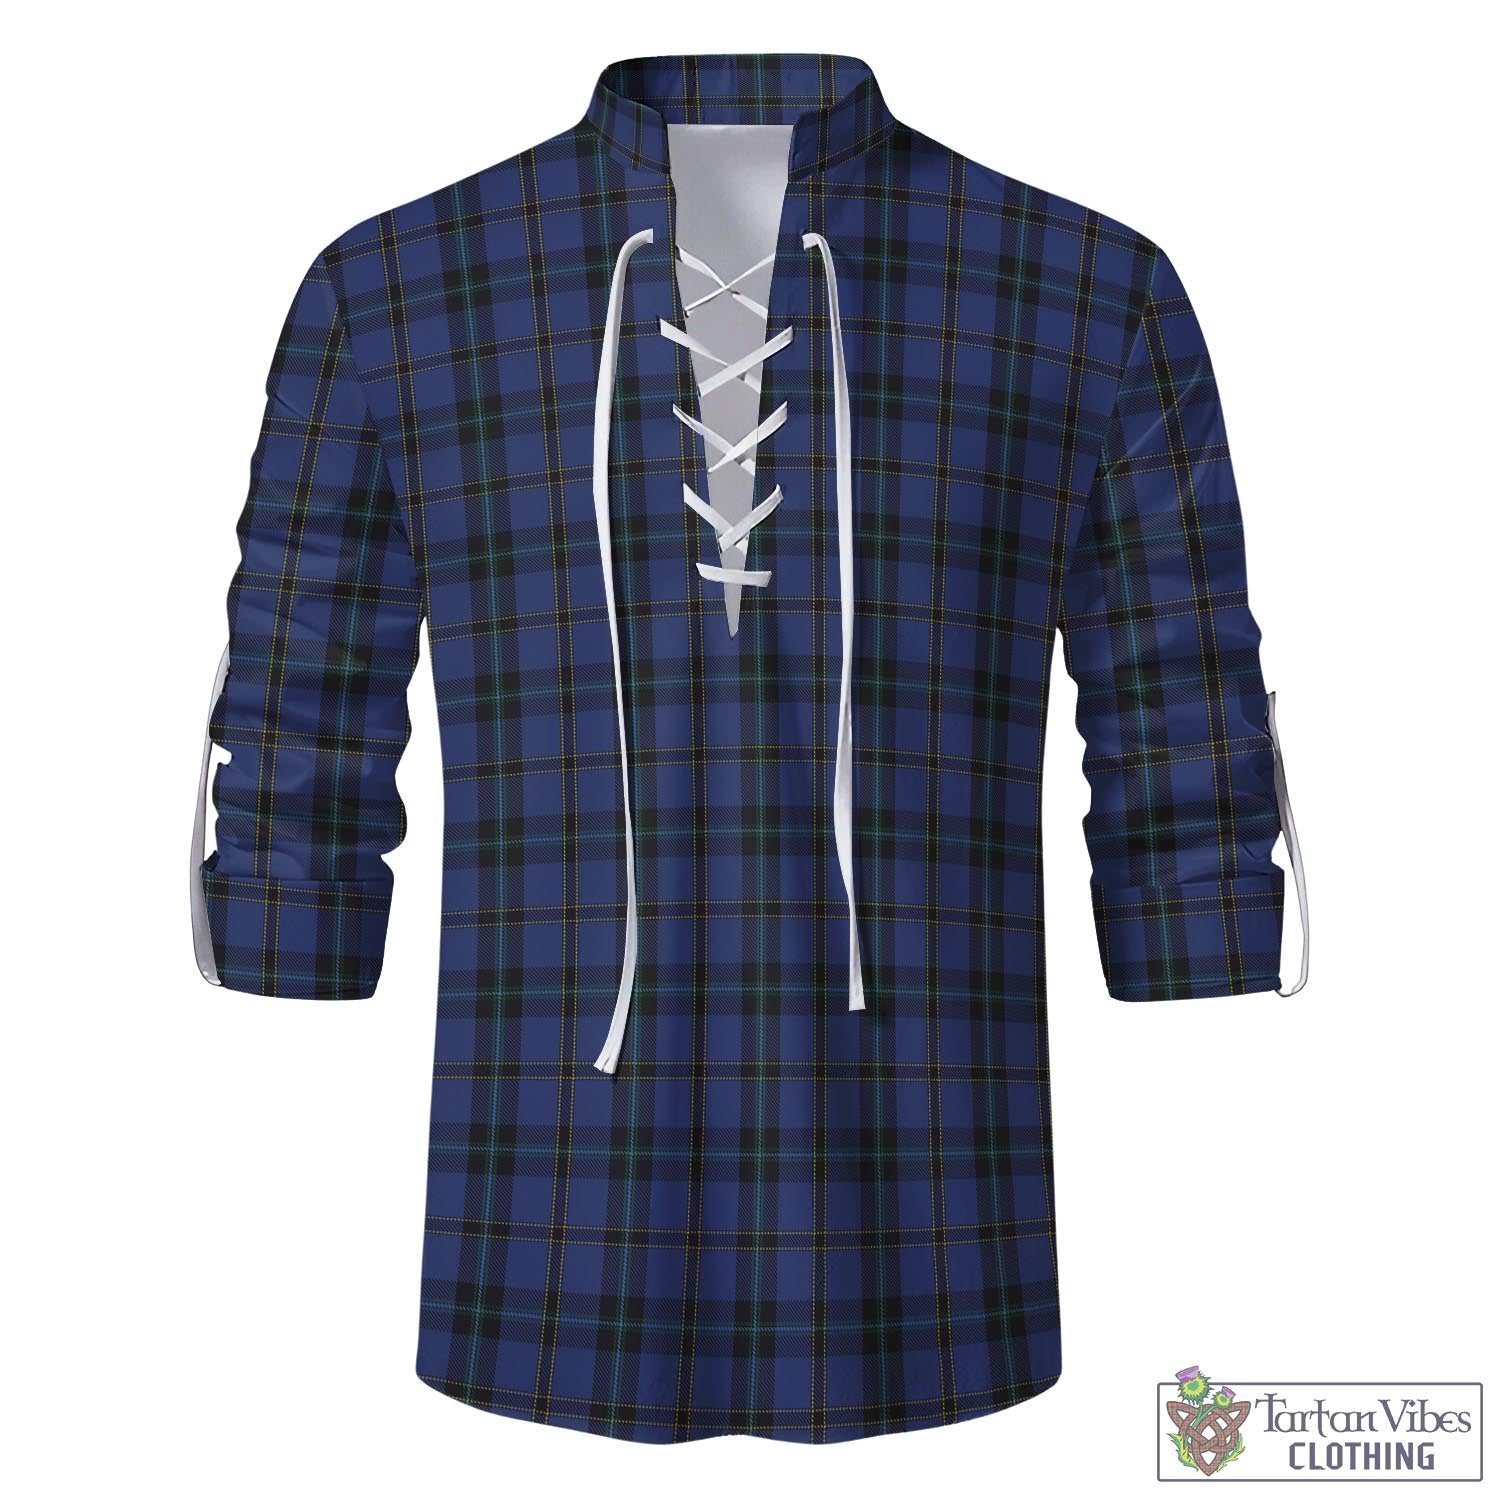 Tartan Vibes Clothing Hope (Vere-Weir) Tartan Men's Scottish Traditional Jacobite Ghillie Kilt Shirt